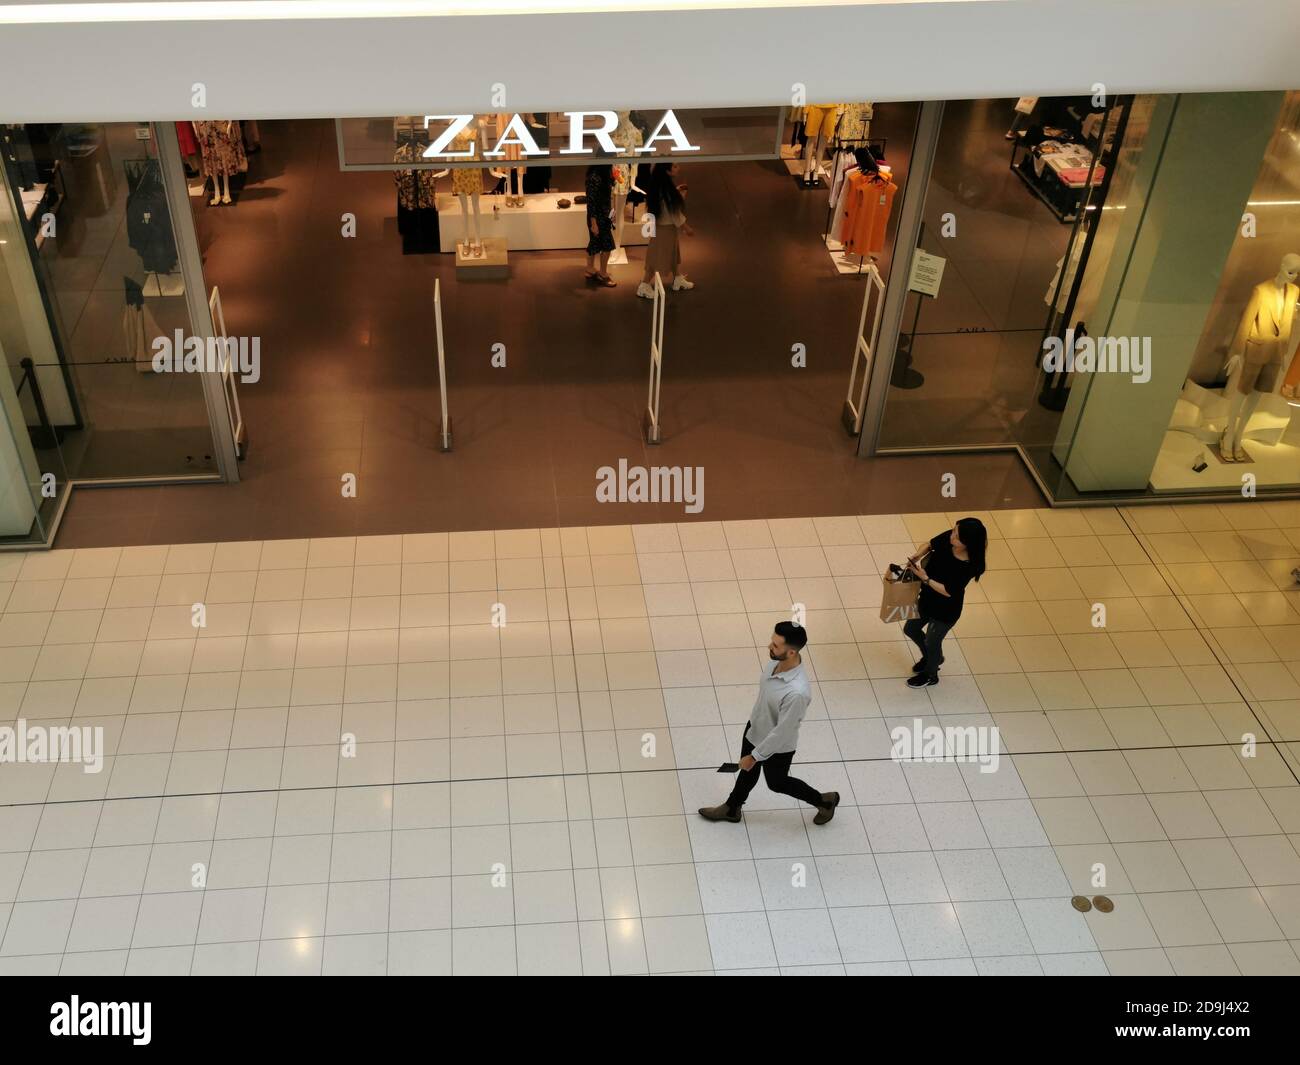 AUCKLAND, NEW ZEALAND - Nov 03, 2020: View of Zara sore in Sylvia Park  Shopping Centre mall Stock Photo - Alamy